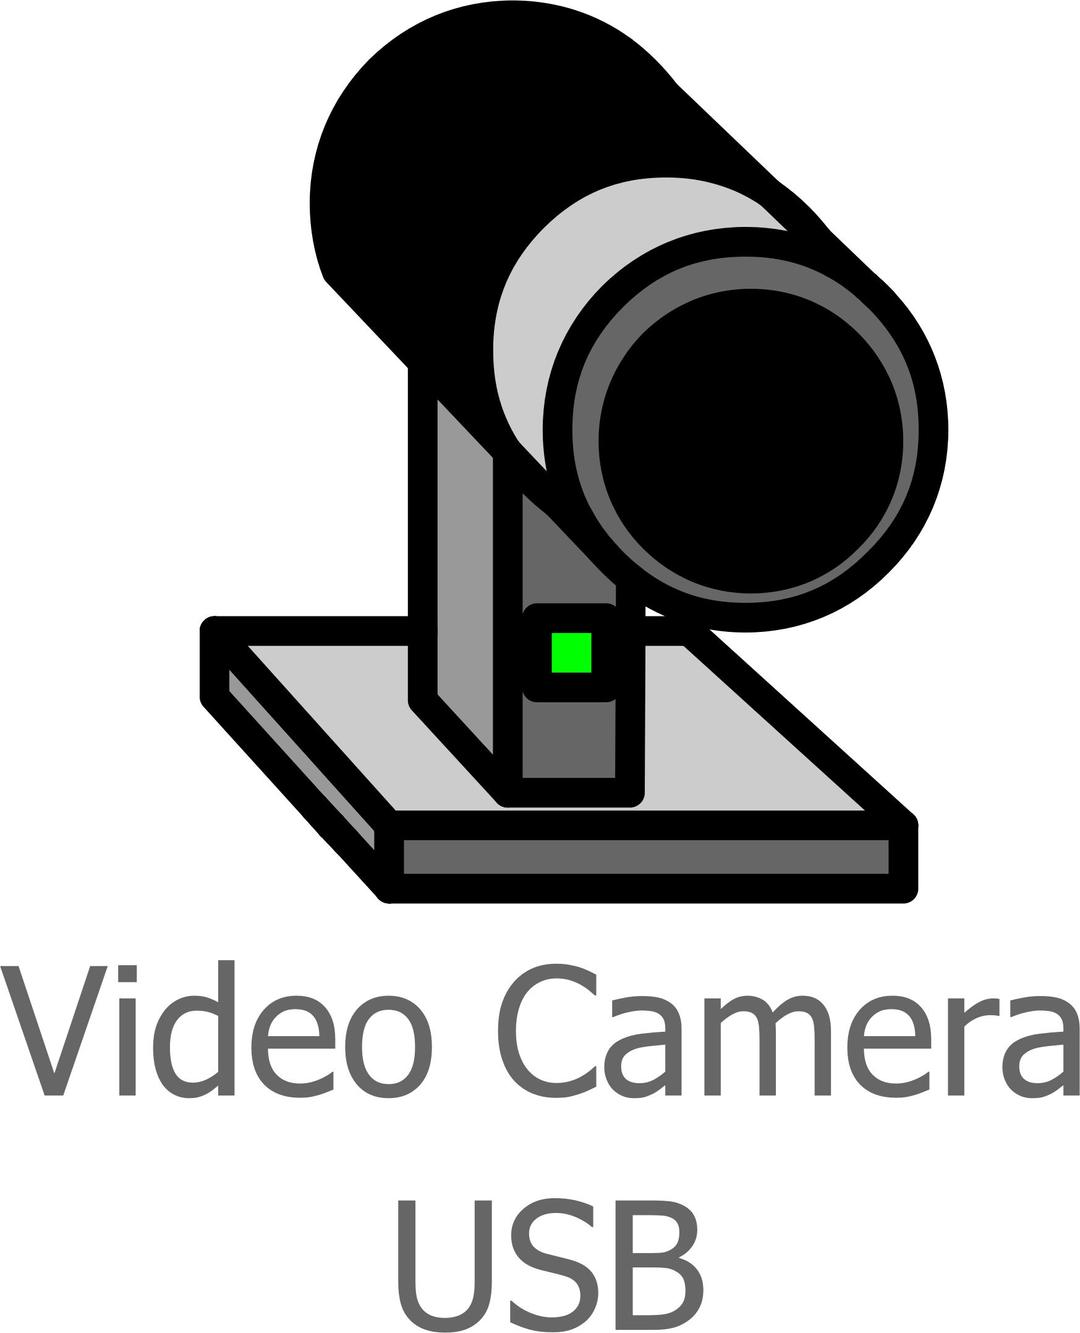 Camera USB Labelled png transparent